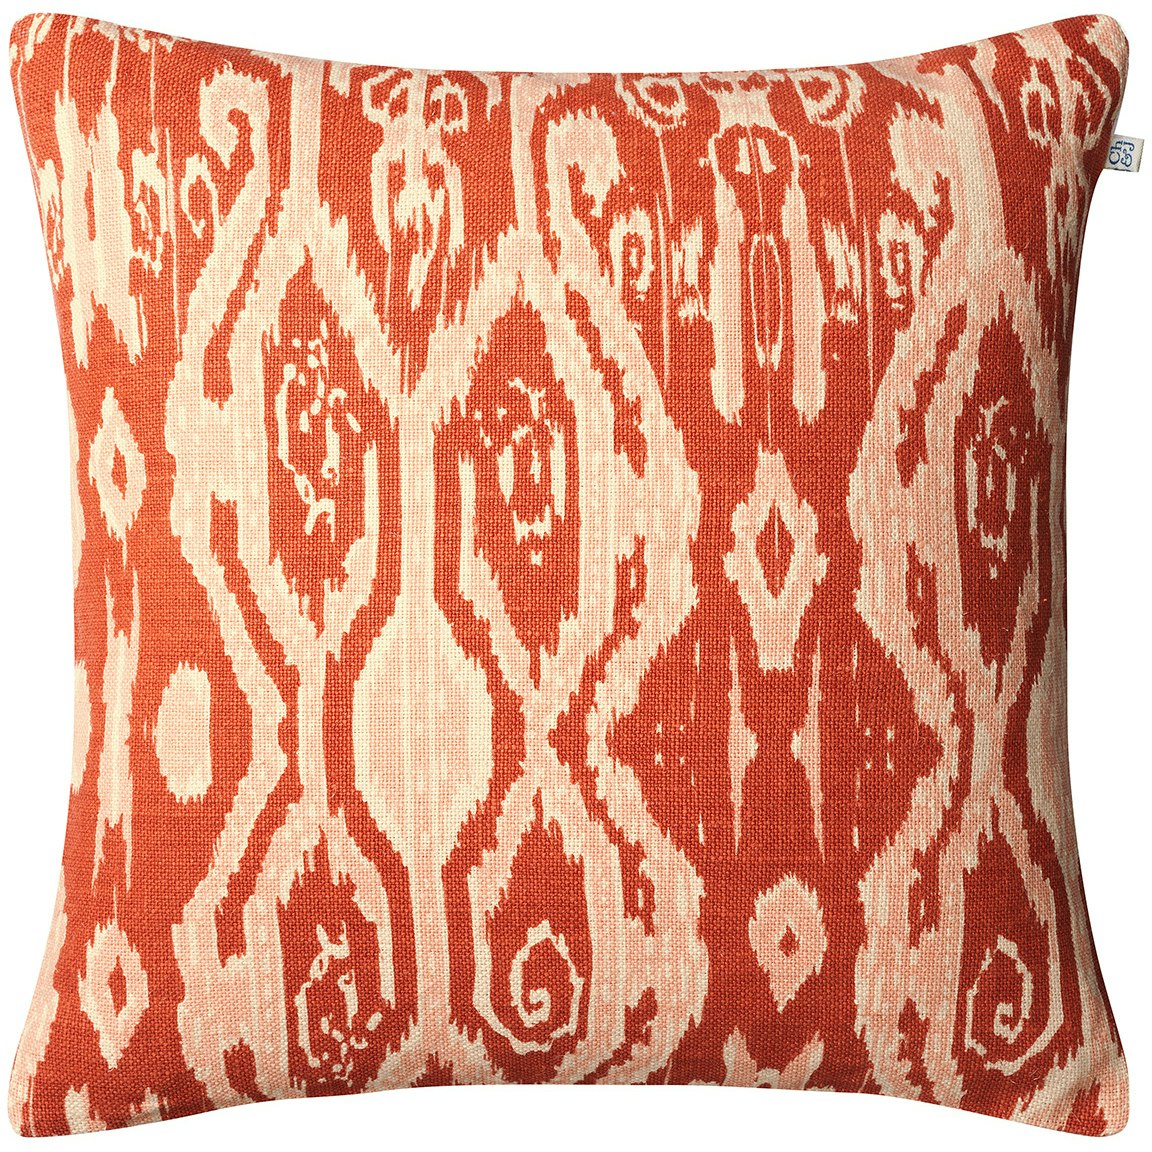 Ikat Madras Cushion Cover 50x50 cm, Apricot Orange / Rose